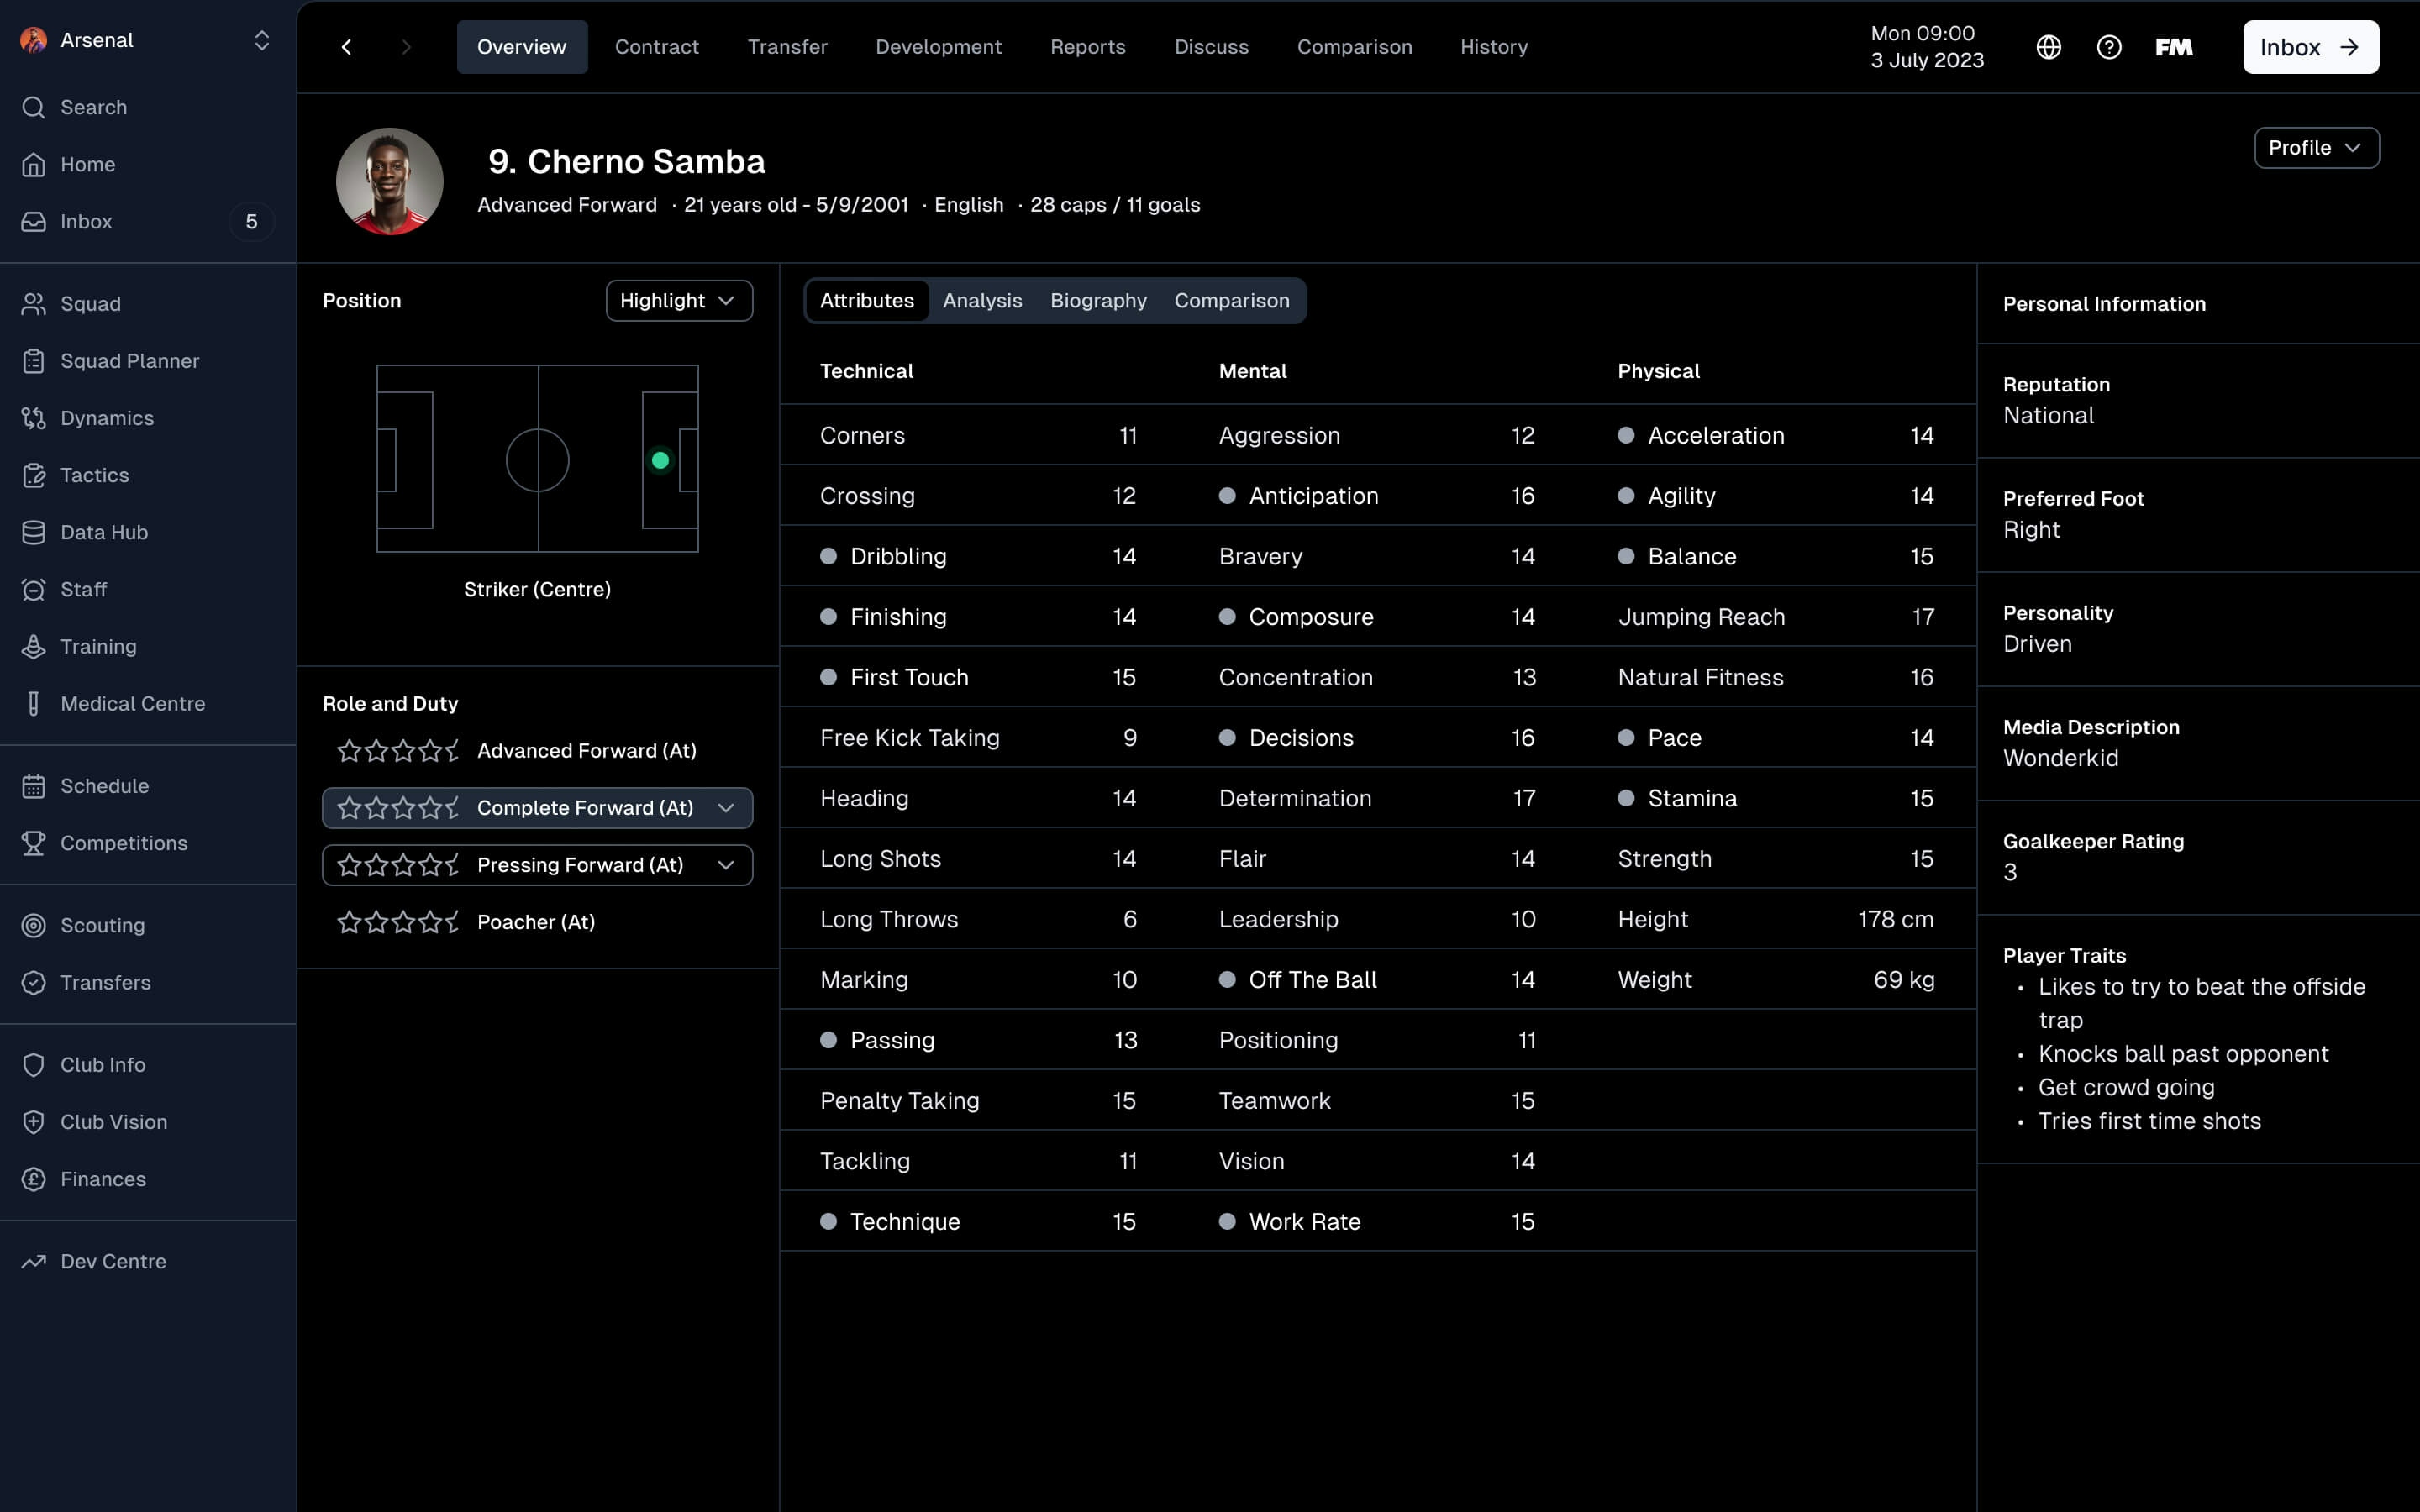 Football Manager dark mode design concept designed in Figma